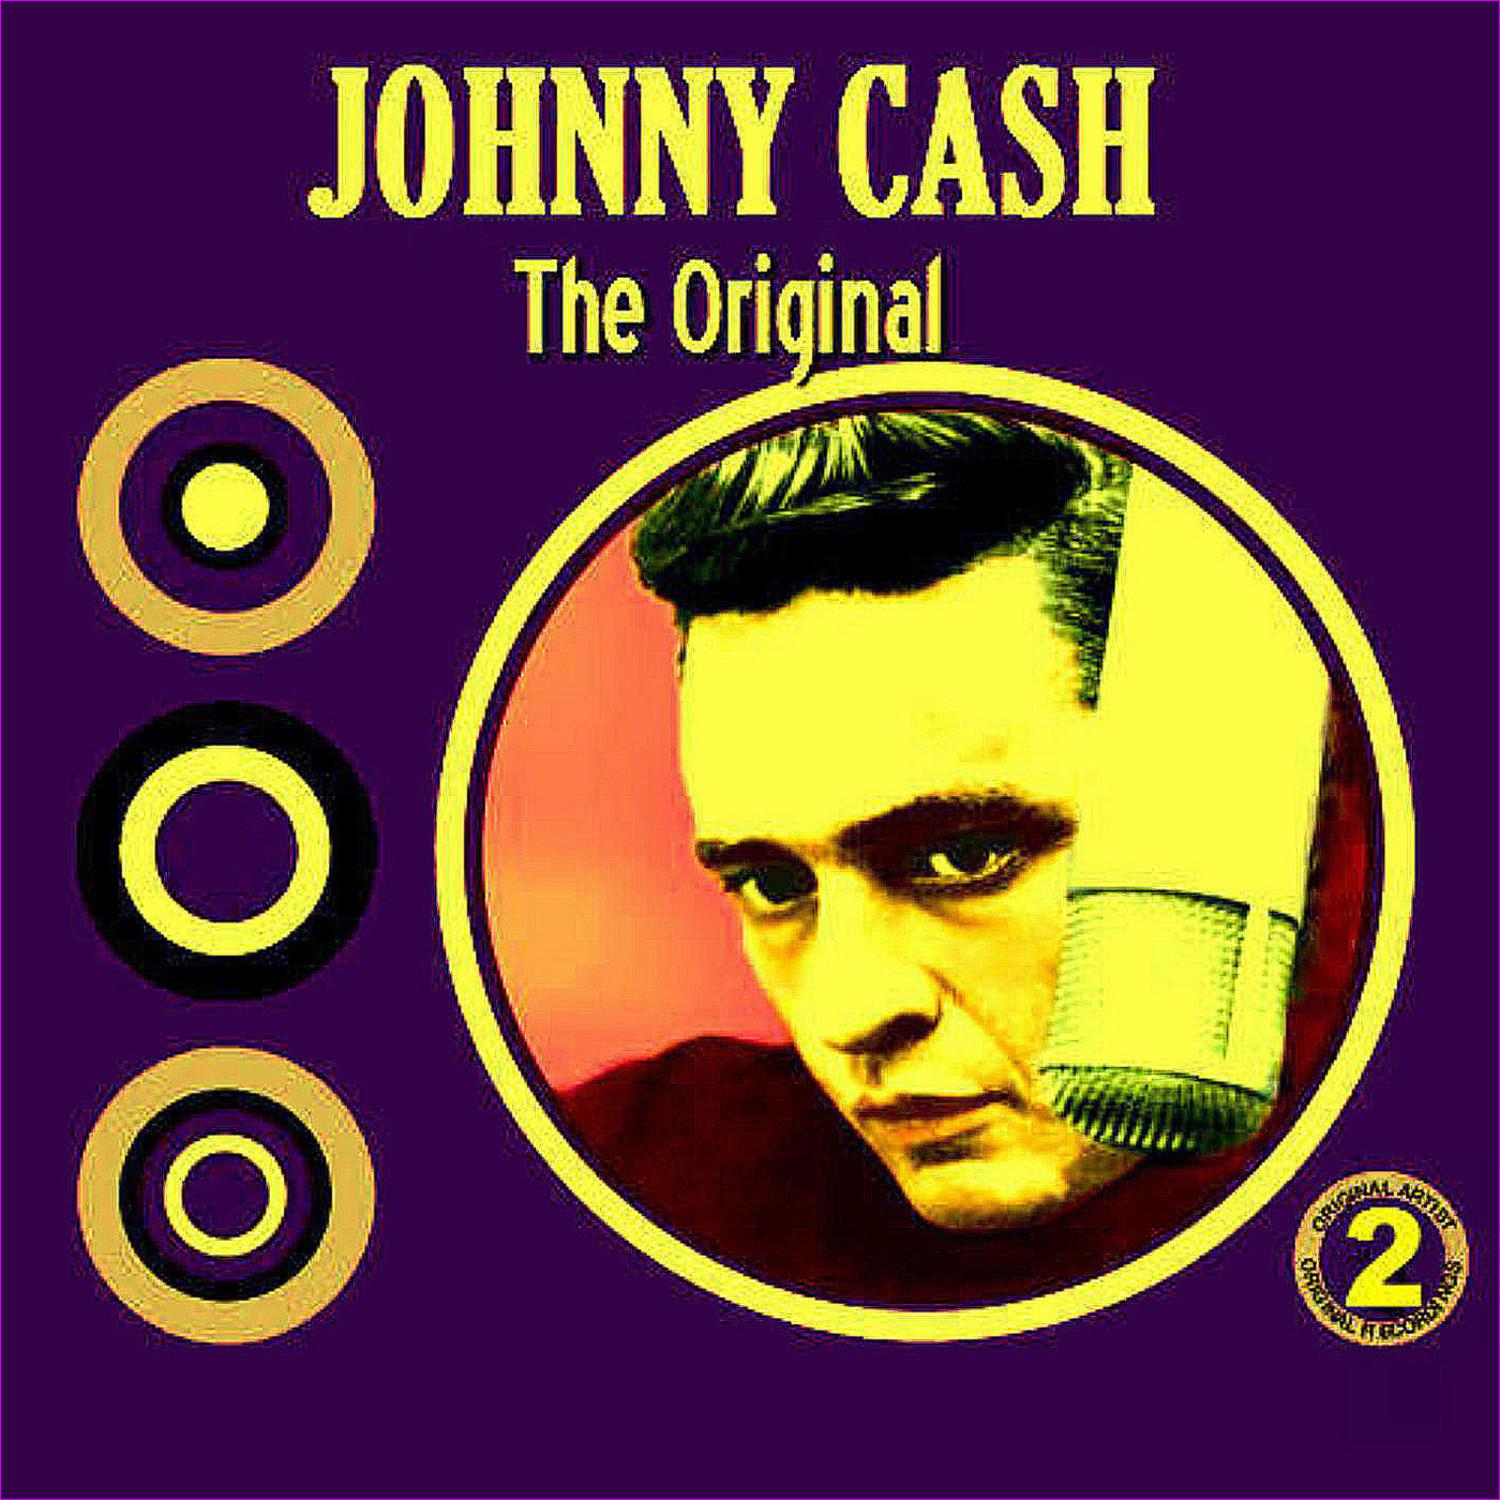 The Original Johnny Cash Volume 2